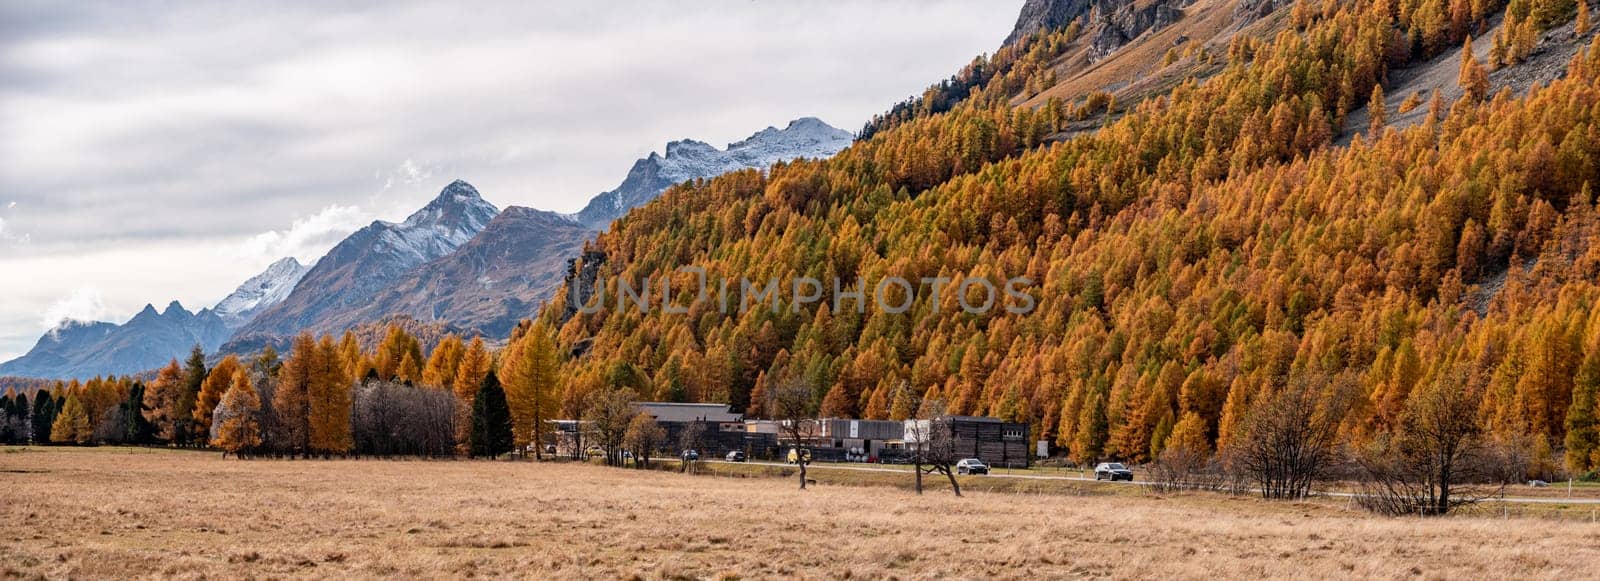 Scenic autumn landscape at lake Silvaplana near St. Moritz, Switzerland